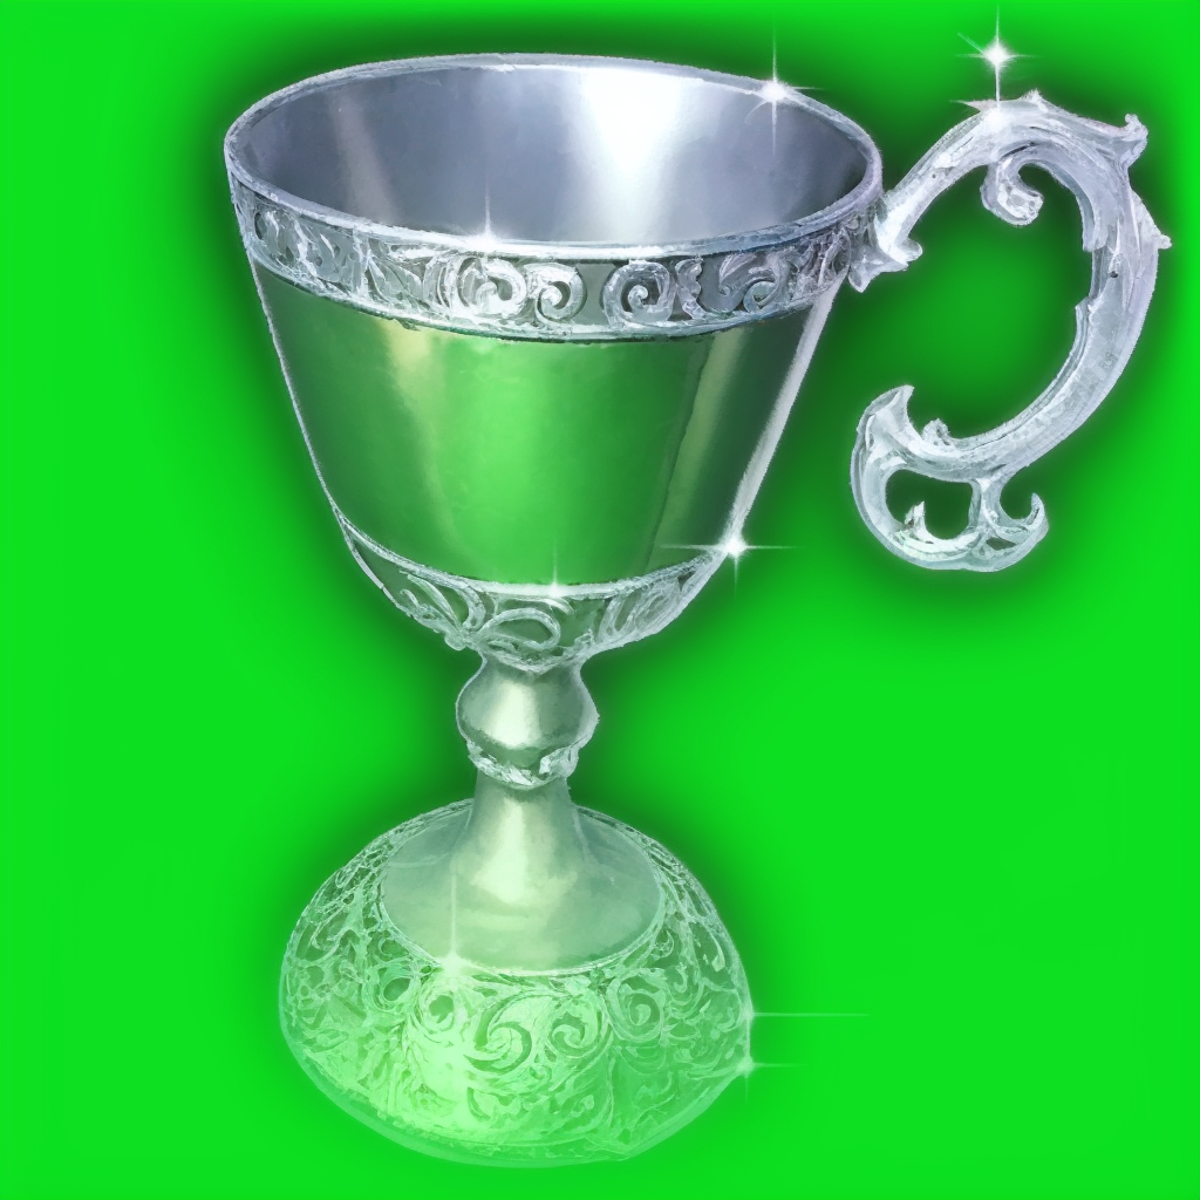 bg3 item icon, silver cup,  <lora:bg3_items_offset:1>
BREAK
green background